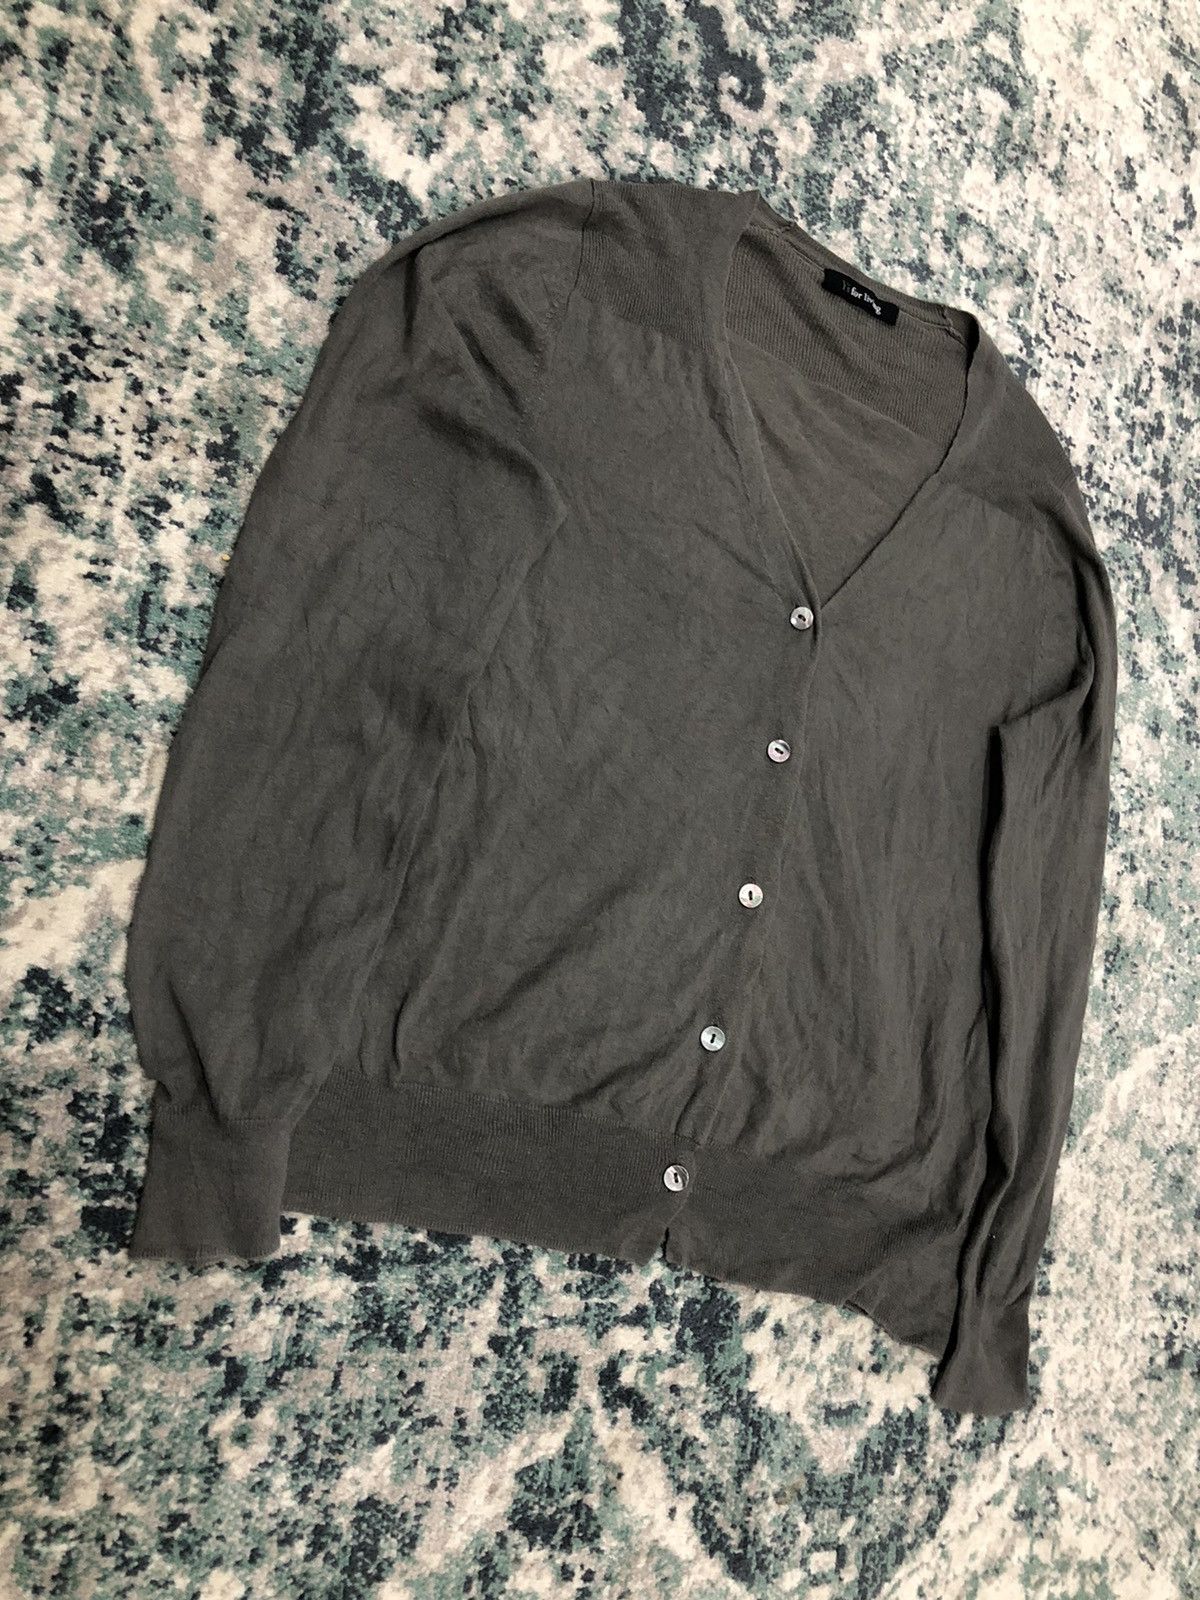 Ys for Living Cardigan Button Ups Kniterar Sweater - 2